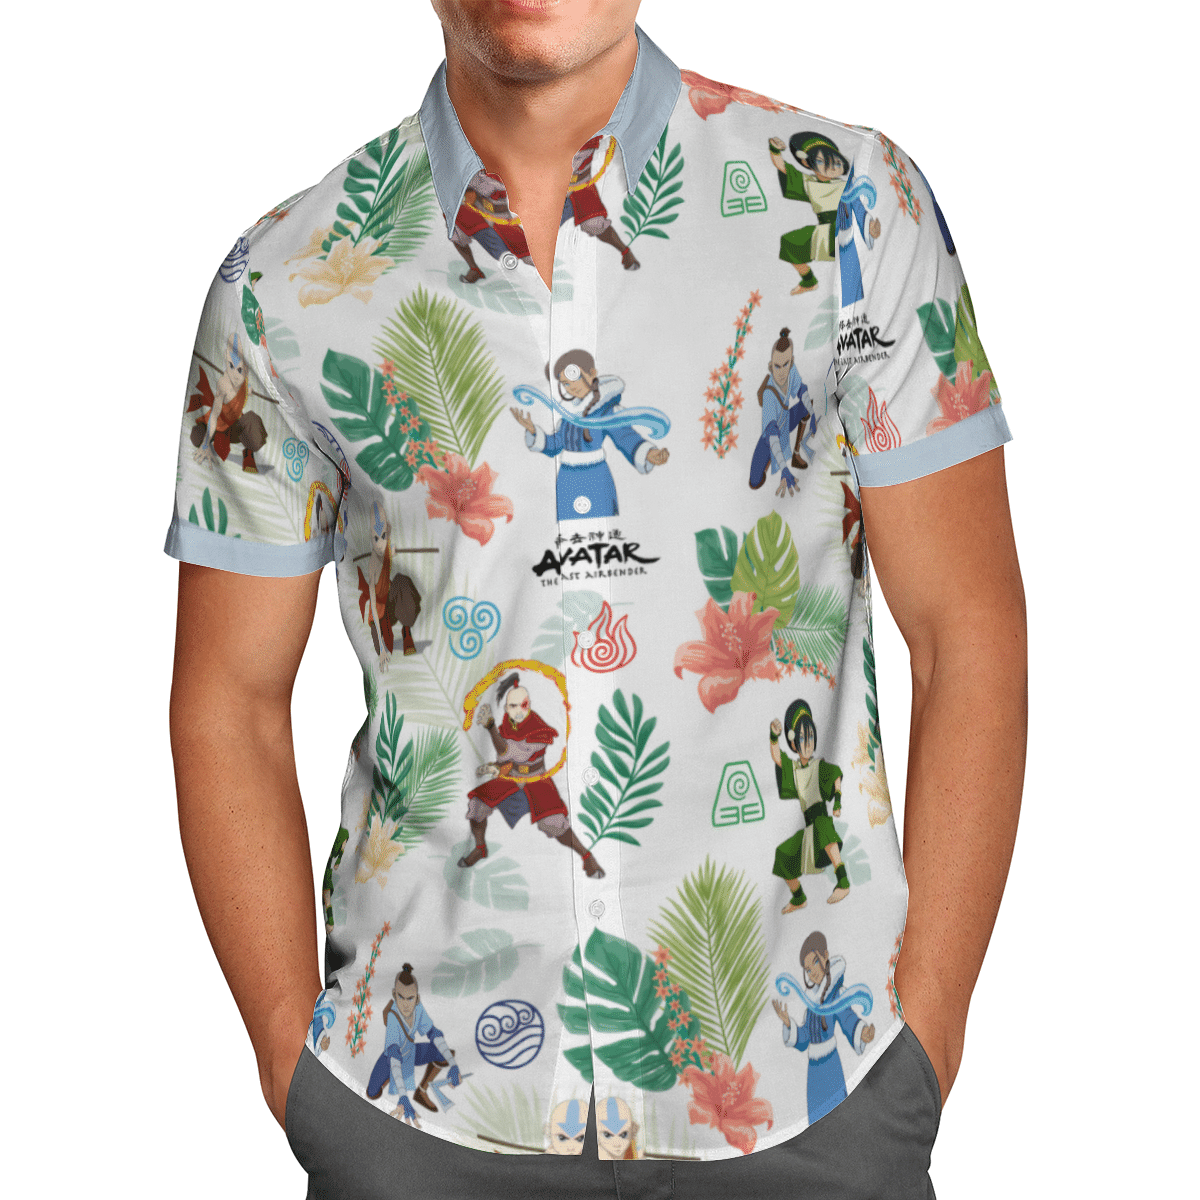 Earth Kingdom Avatar Hawaiian shirt – LIMITED EDITION